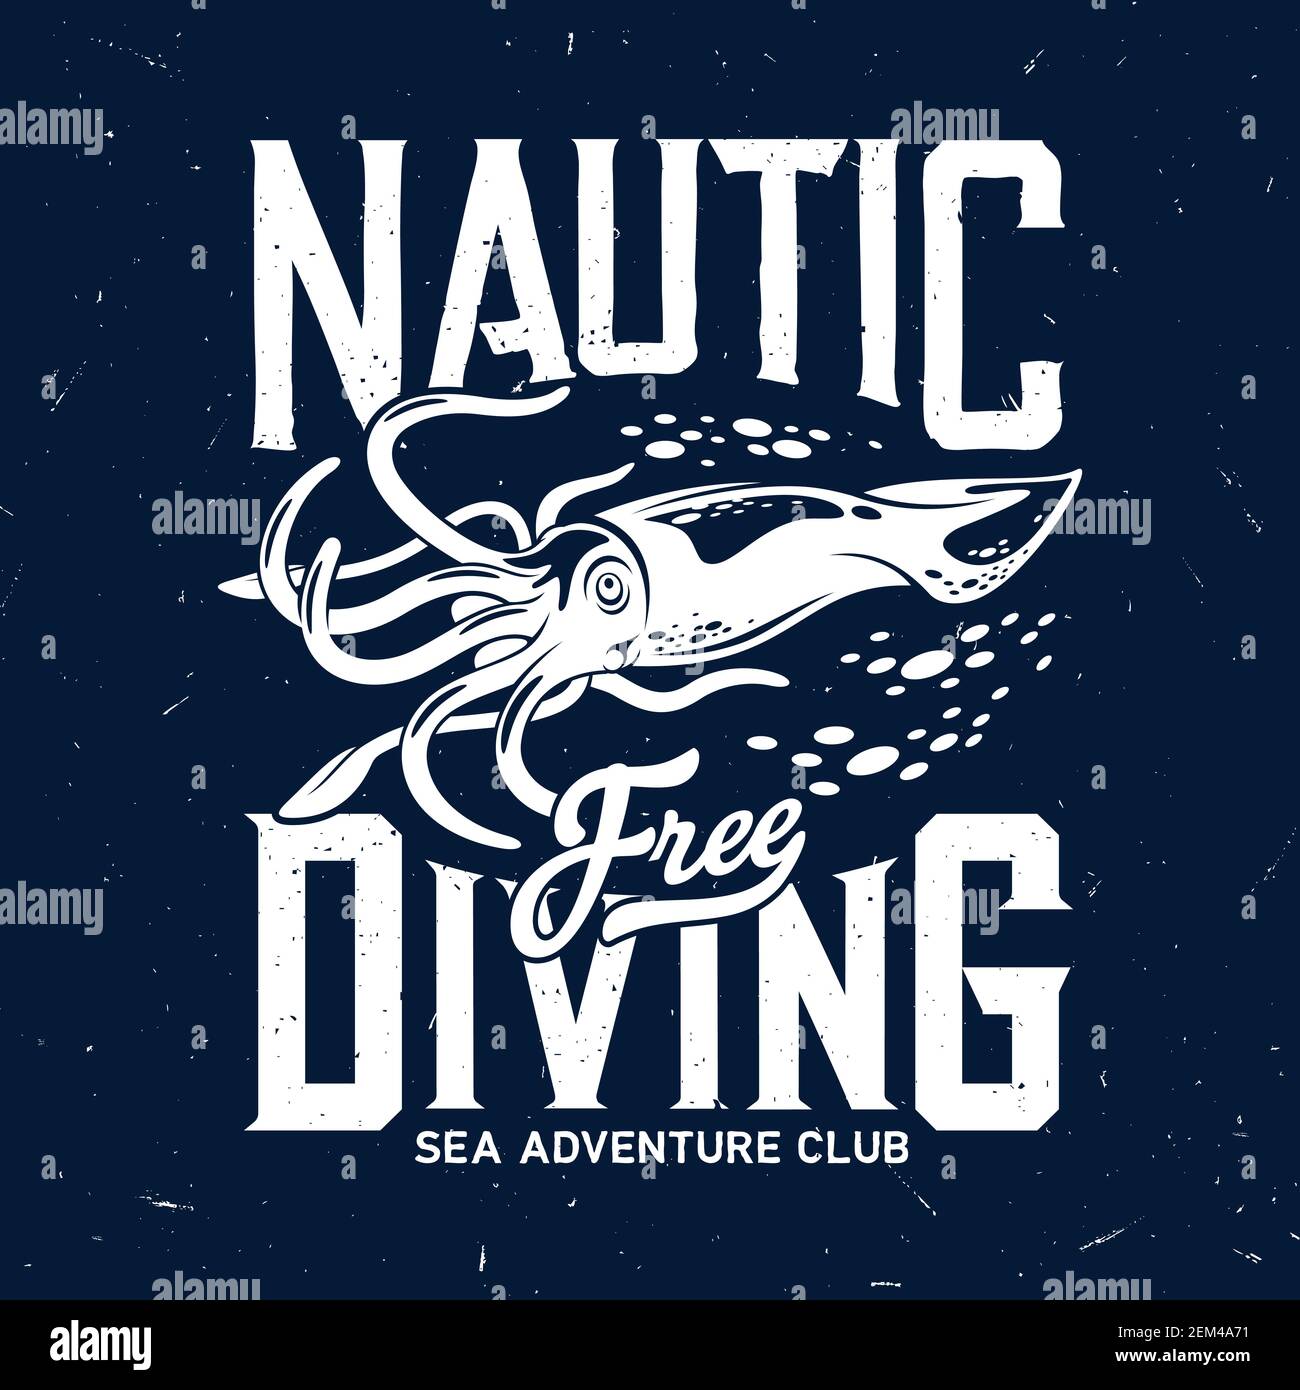 Stampa T-shirt con calamari, mascotte calamaria per diving club, avventura subacquea maschera nuda grunge blu con emblema t-shirt molluschi marini. OC Illustrazione Vettoriale